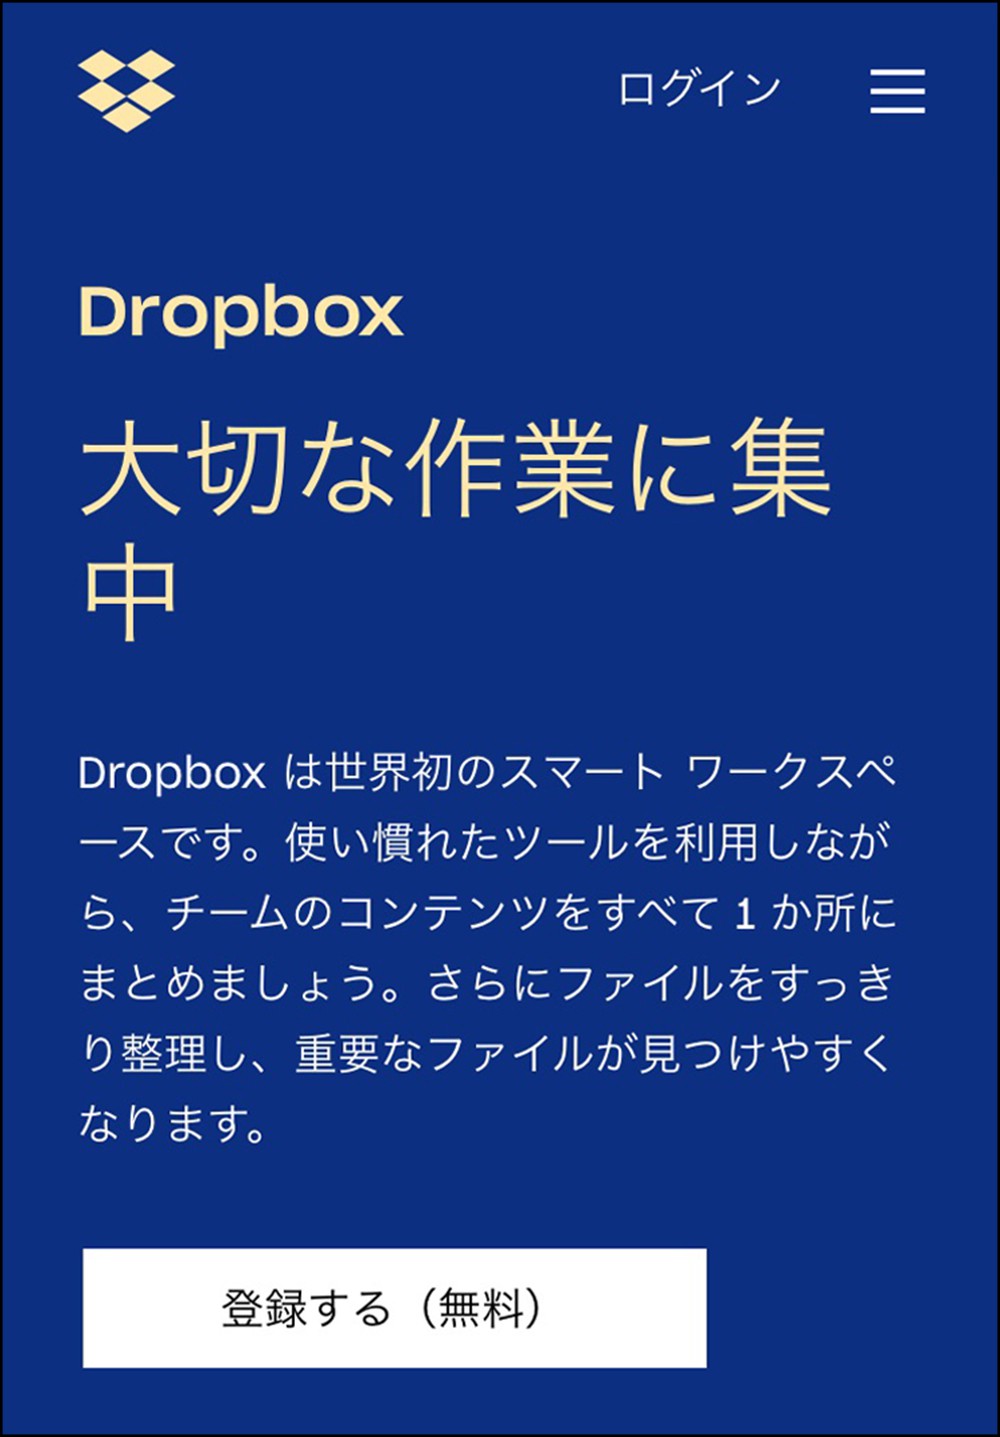 「DropBox(ドロップボックス)」に無料で登録